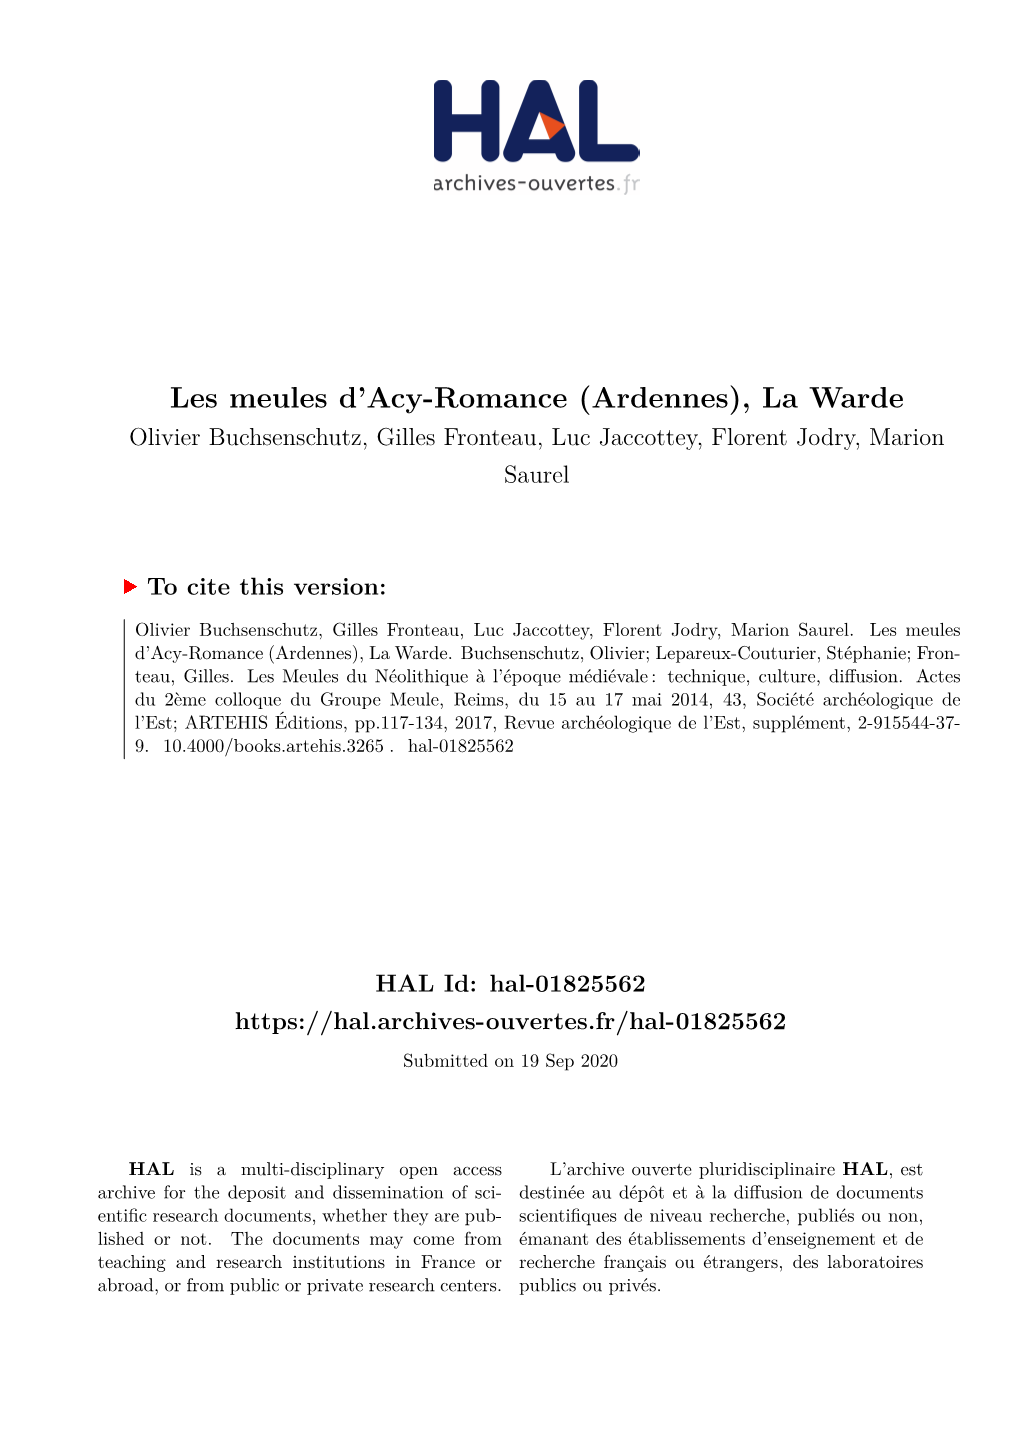 Les Meules D'acy-Romance (Ardennes)